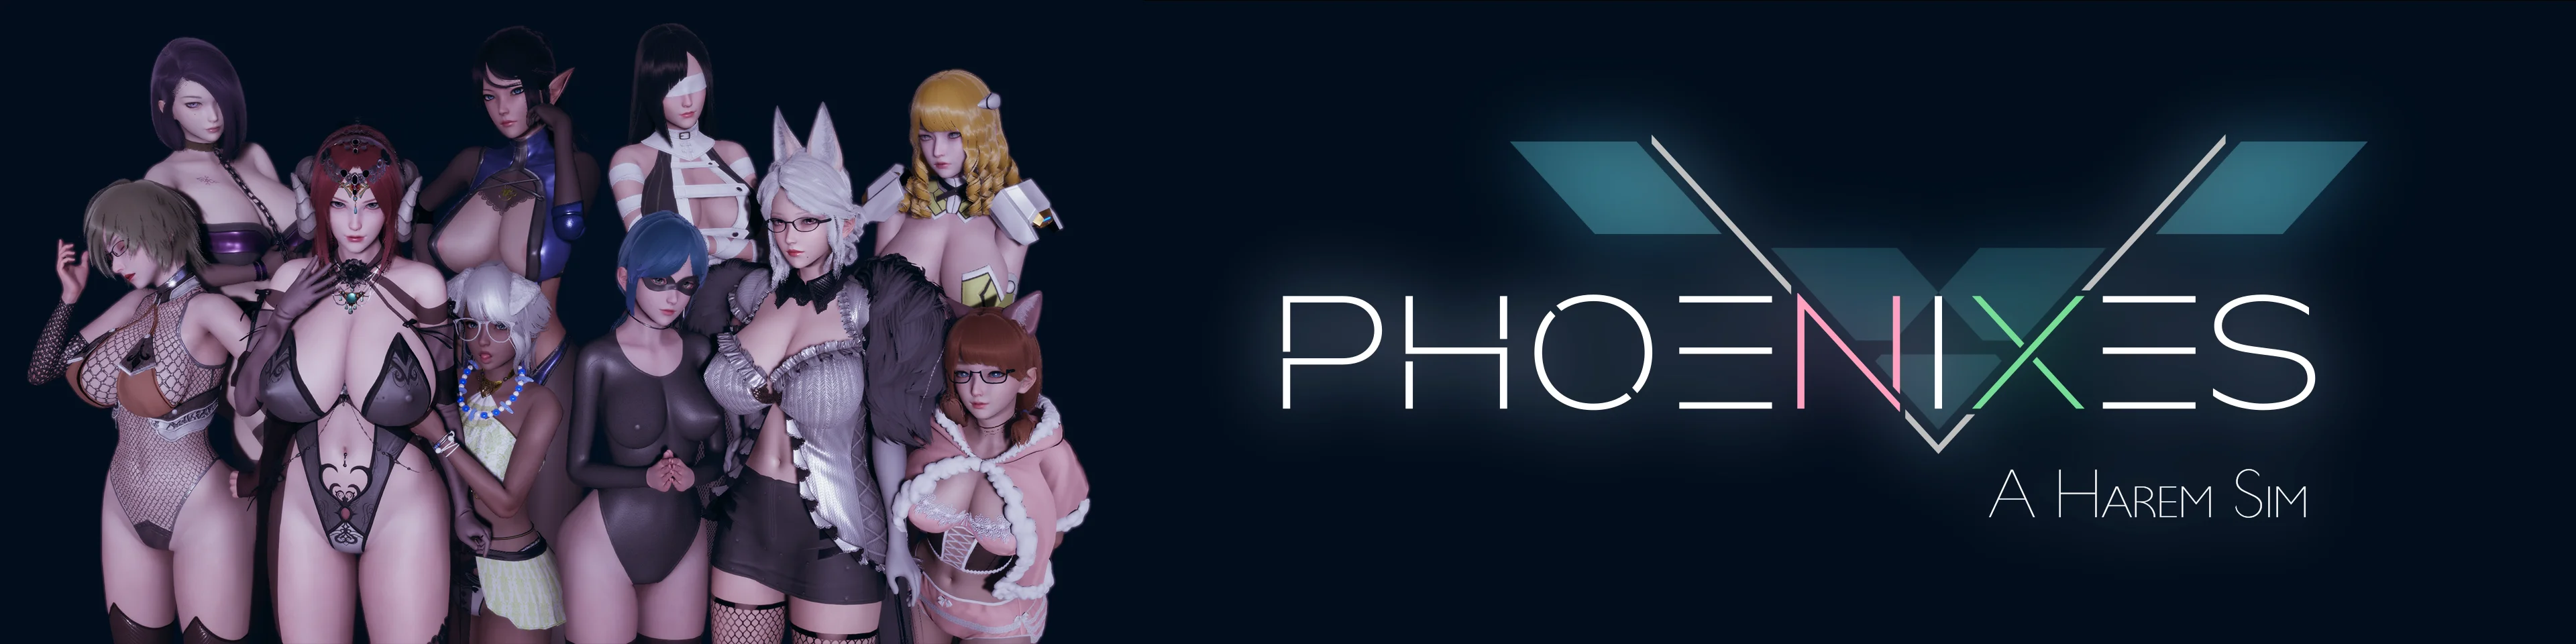 Phoenixes v.0.10